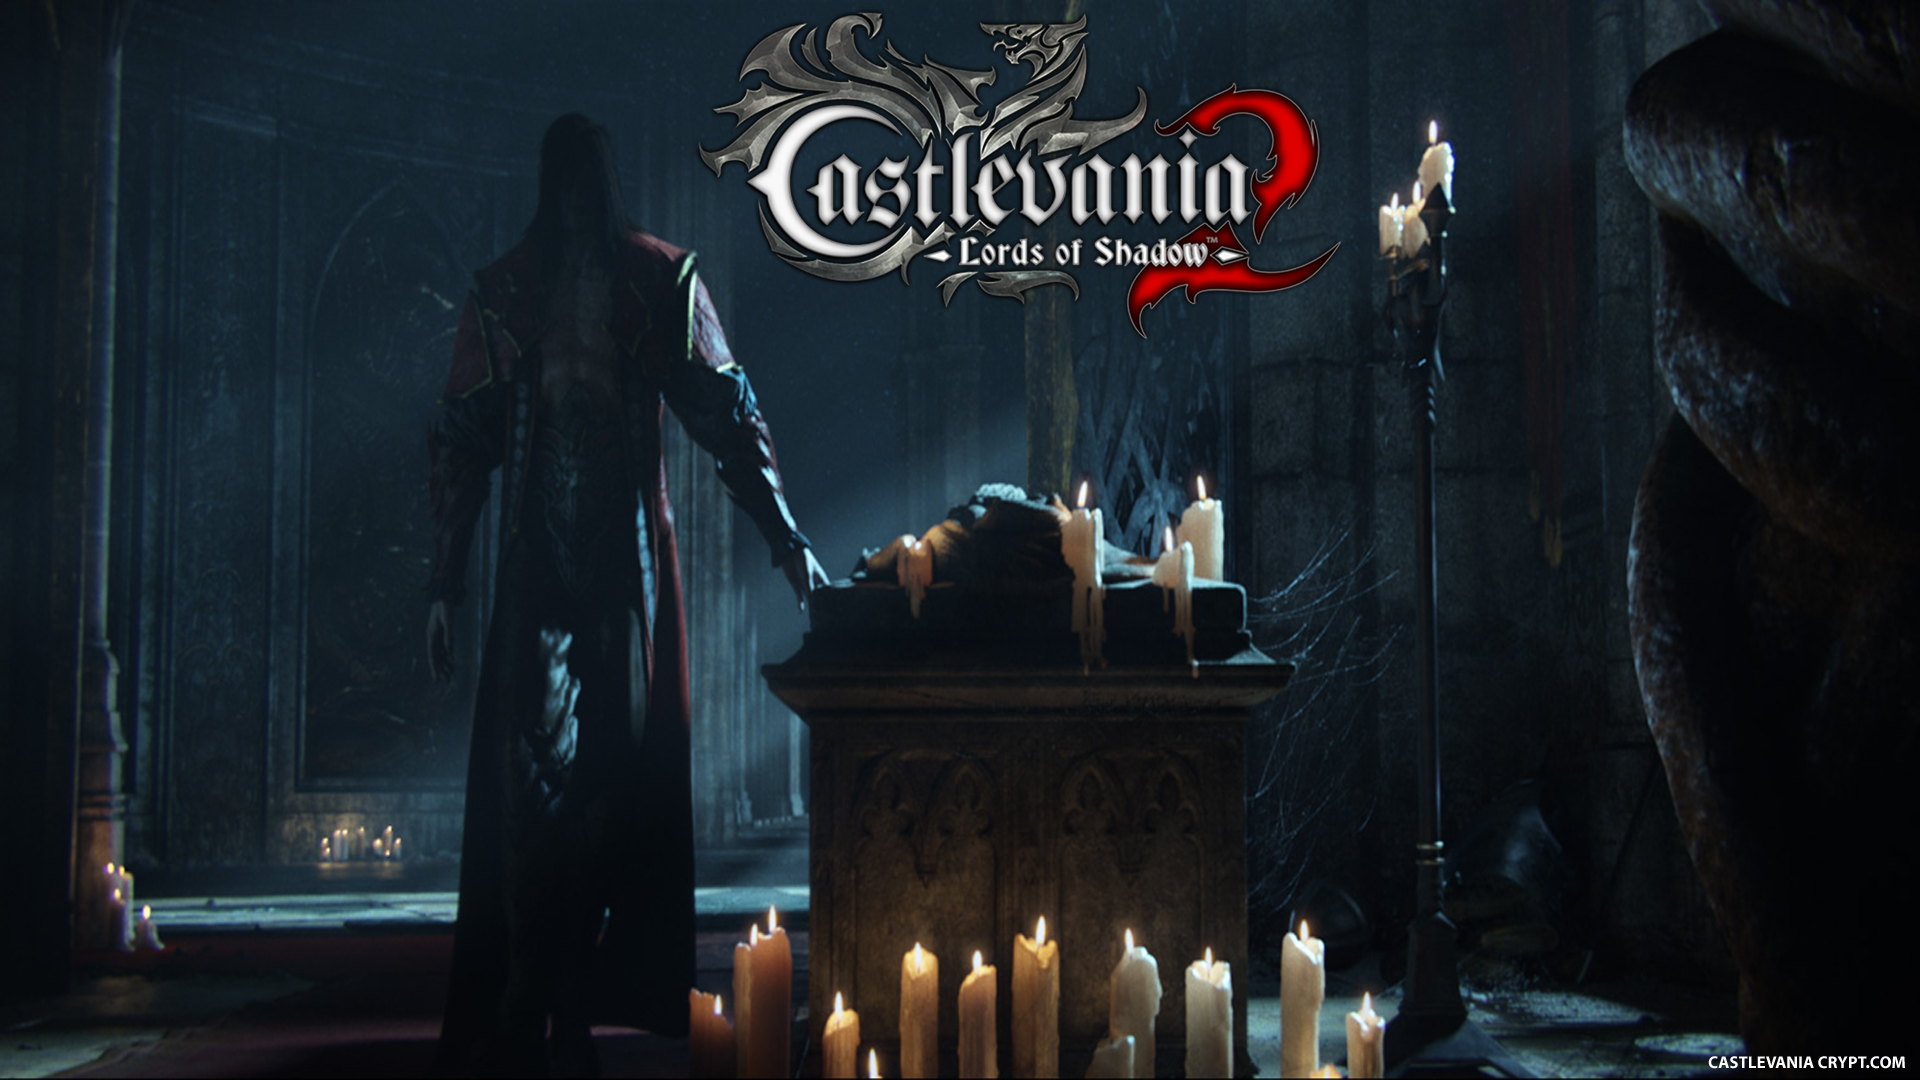 Castlevania: Lords of Shadow 2 Wallpaper | Castlevania Crypt.com ...